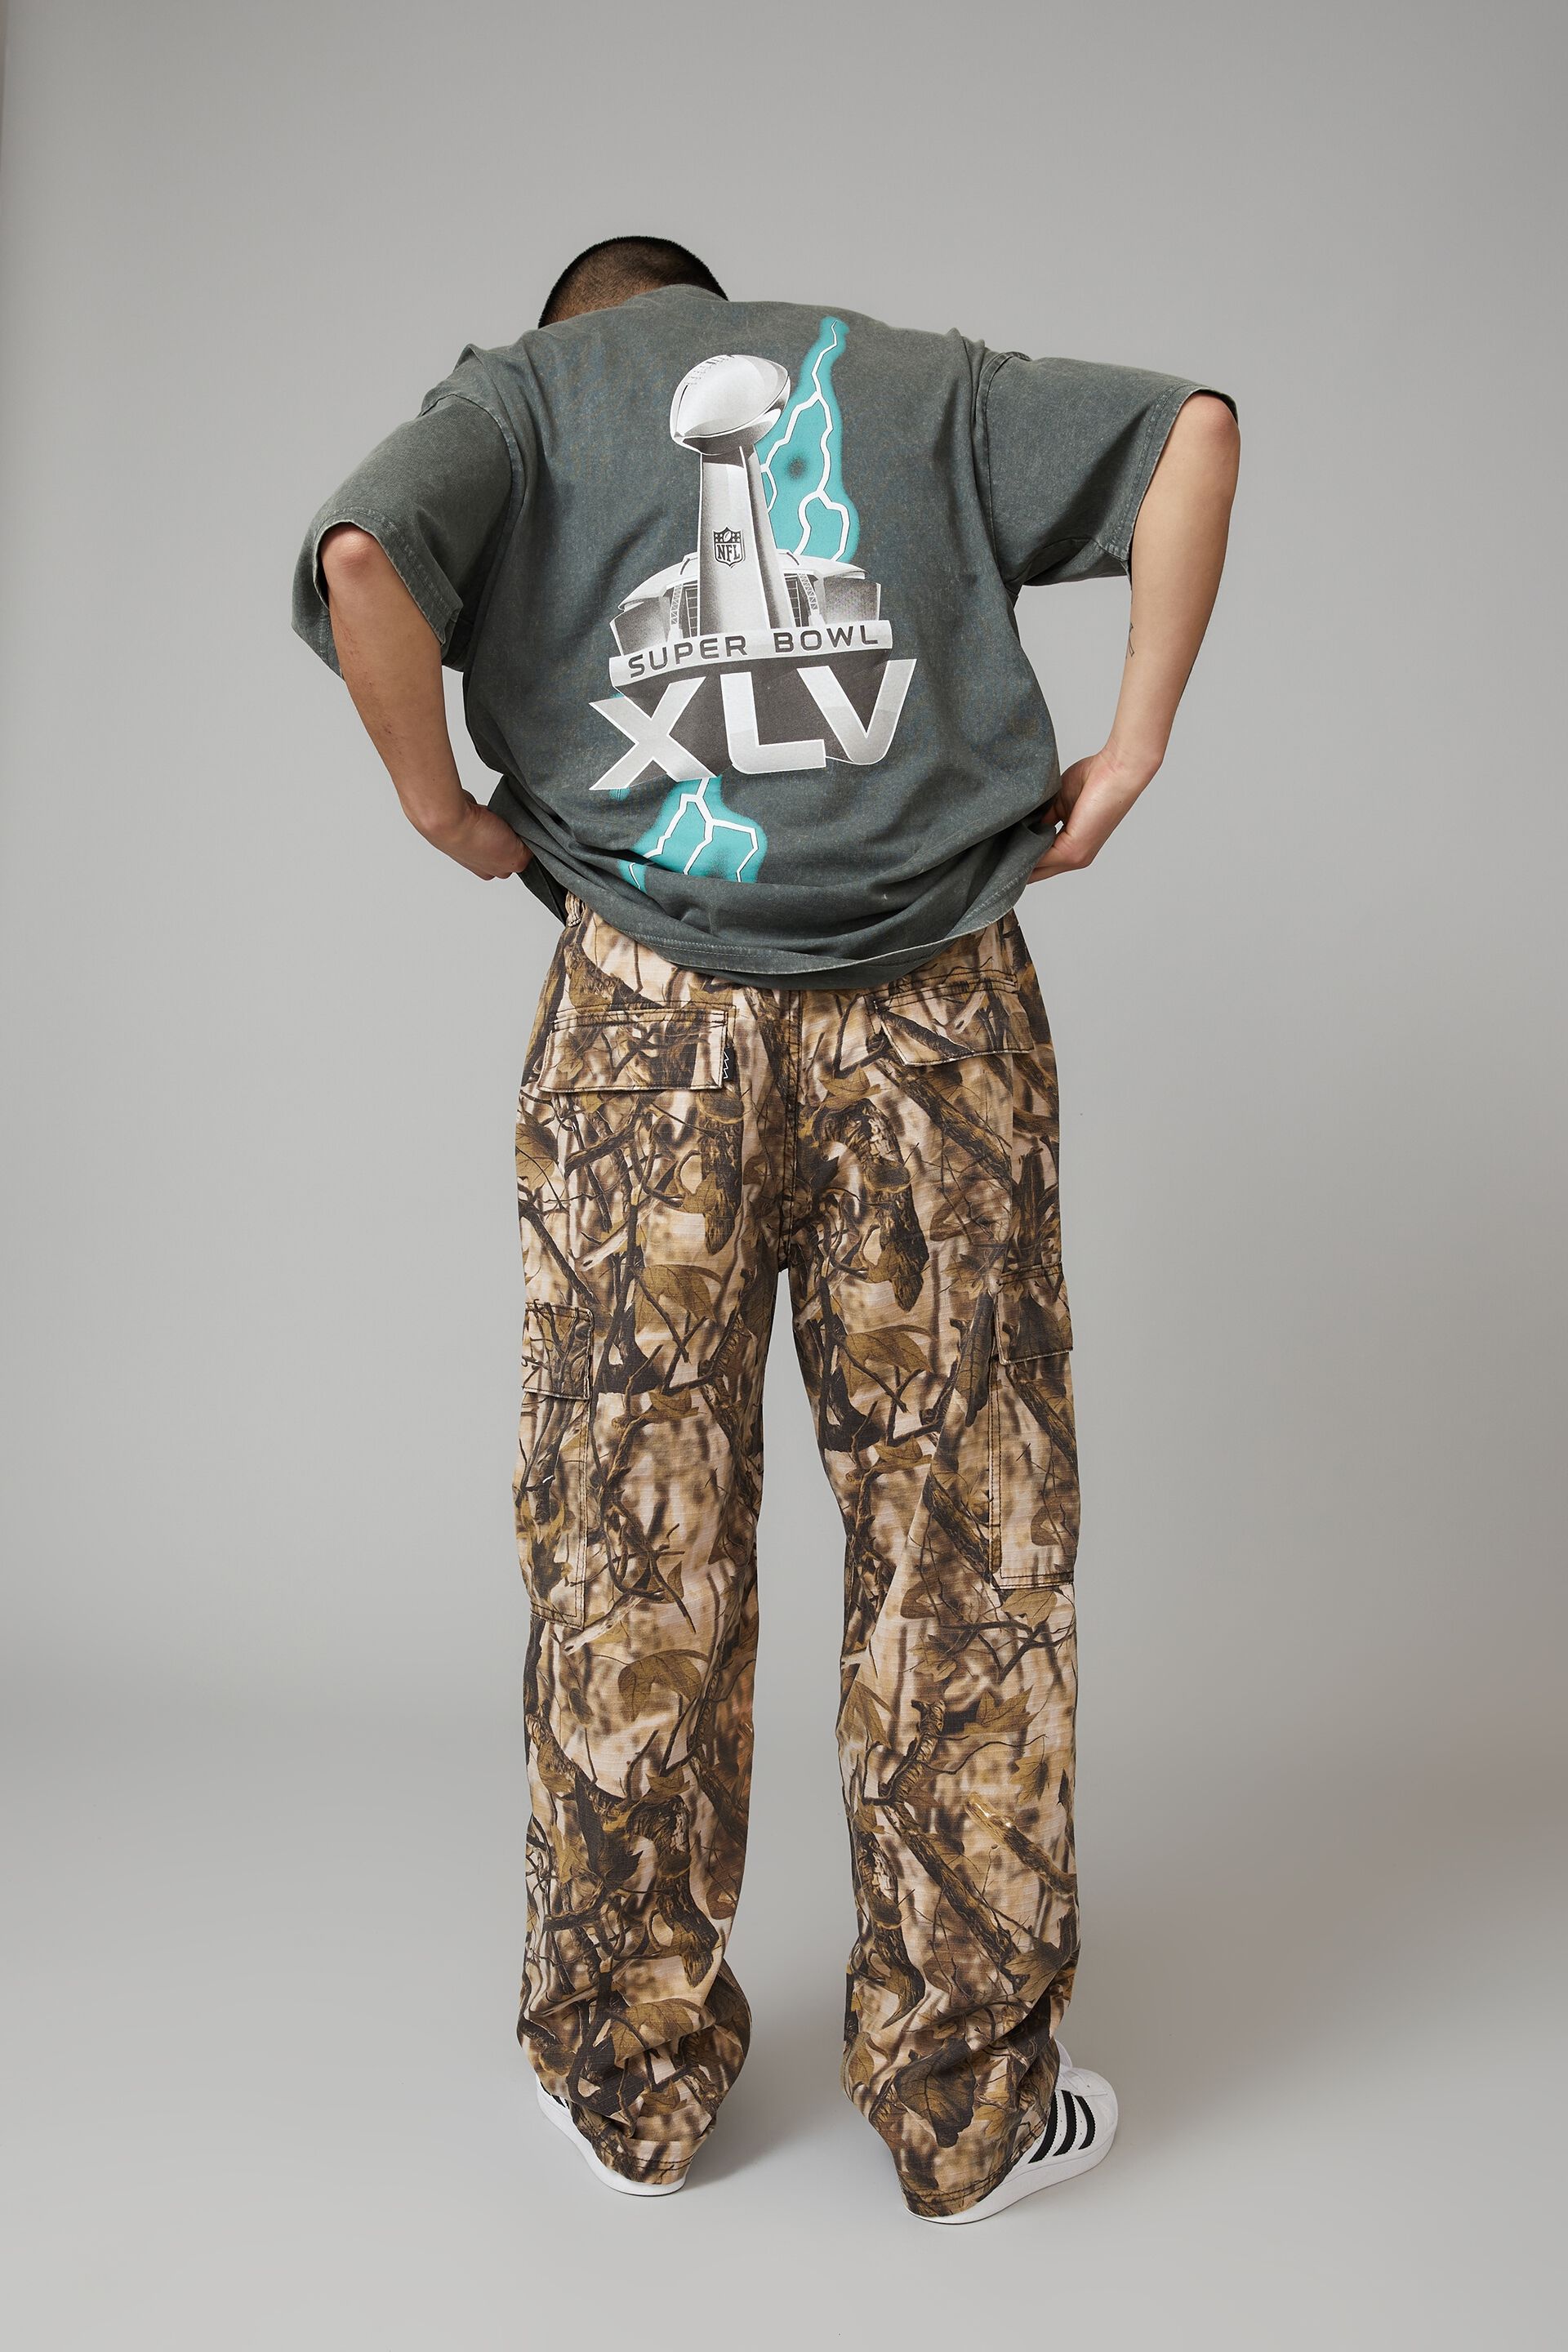 Wear baggy camo pants wide leg jeans military camouflage  Army Pants  Outfit  Camo Pants cargo pants Khaki Outfit